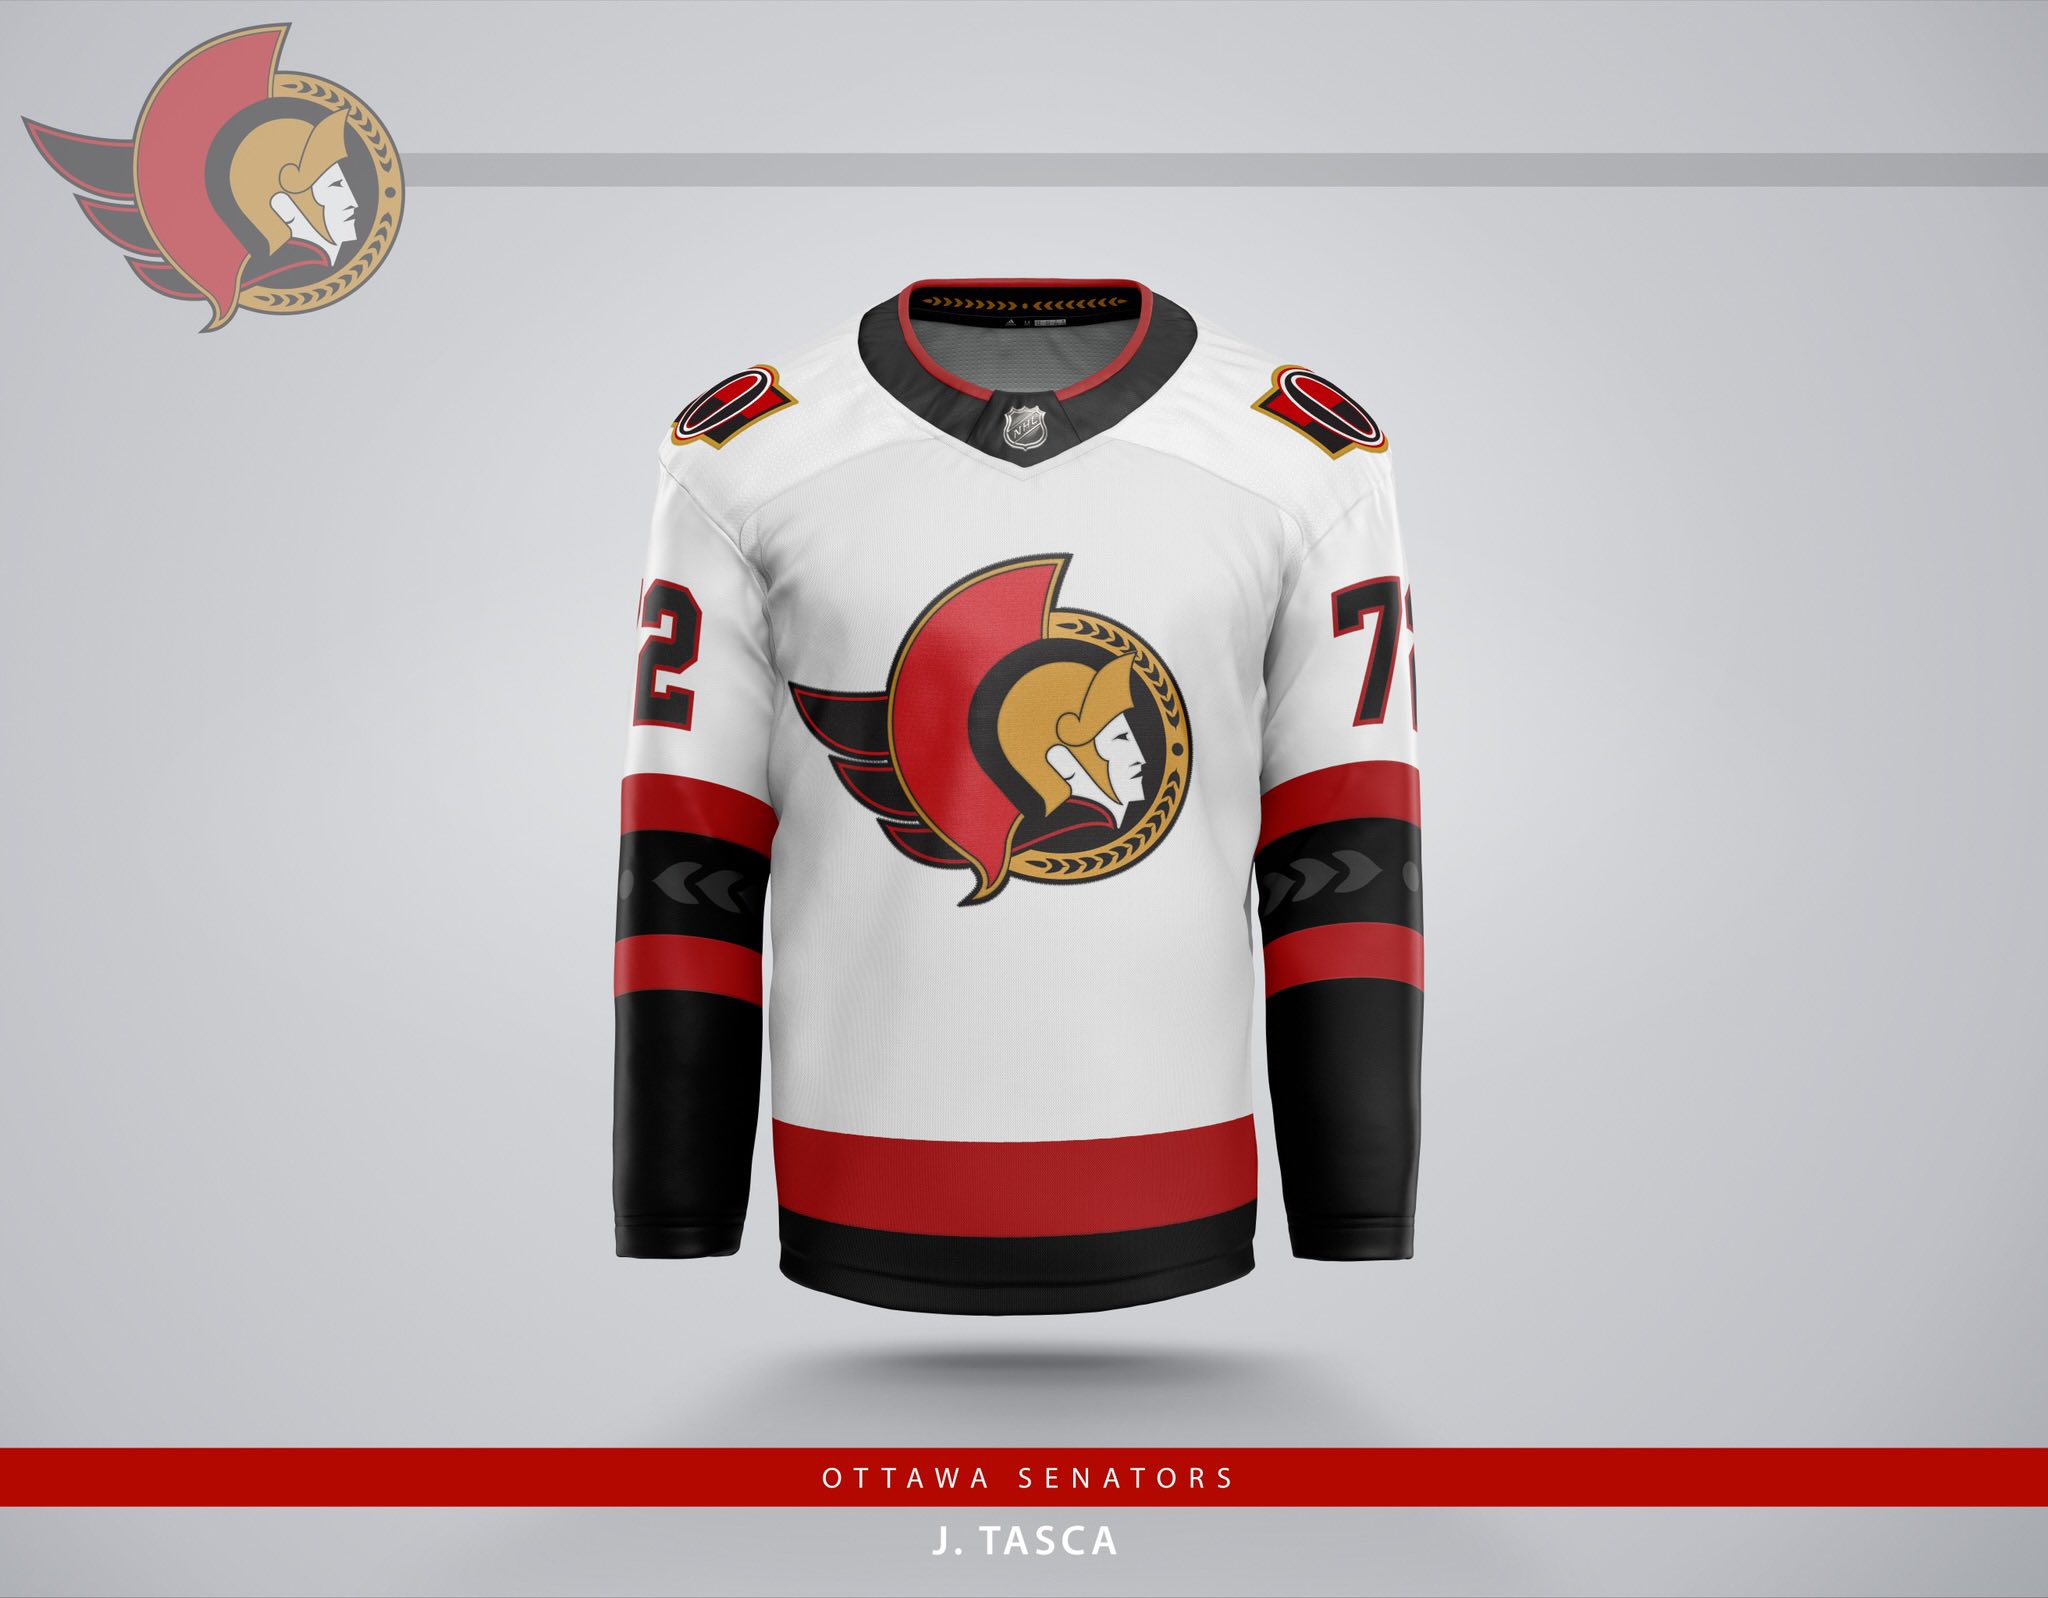 Report: Senators to rebrand before next season, use vintage 2D logo